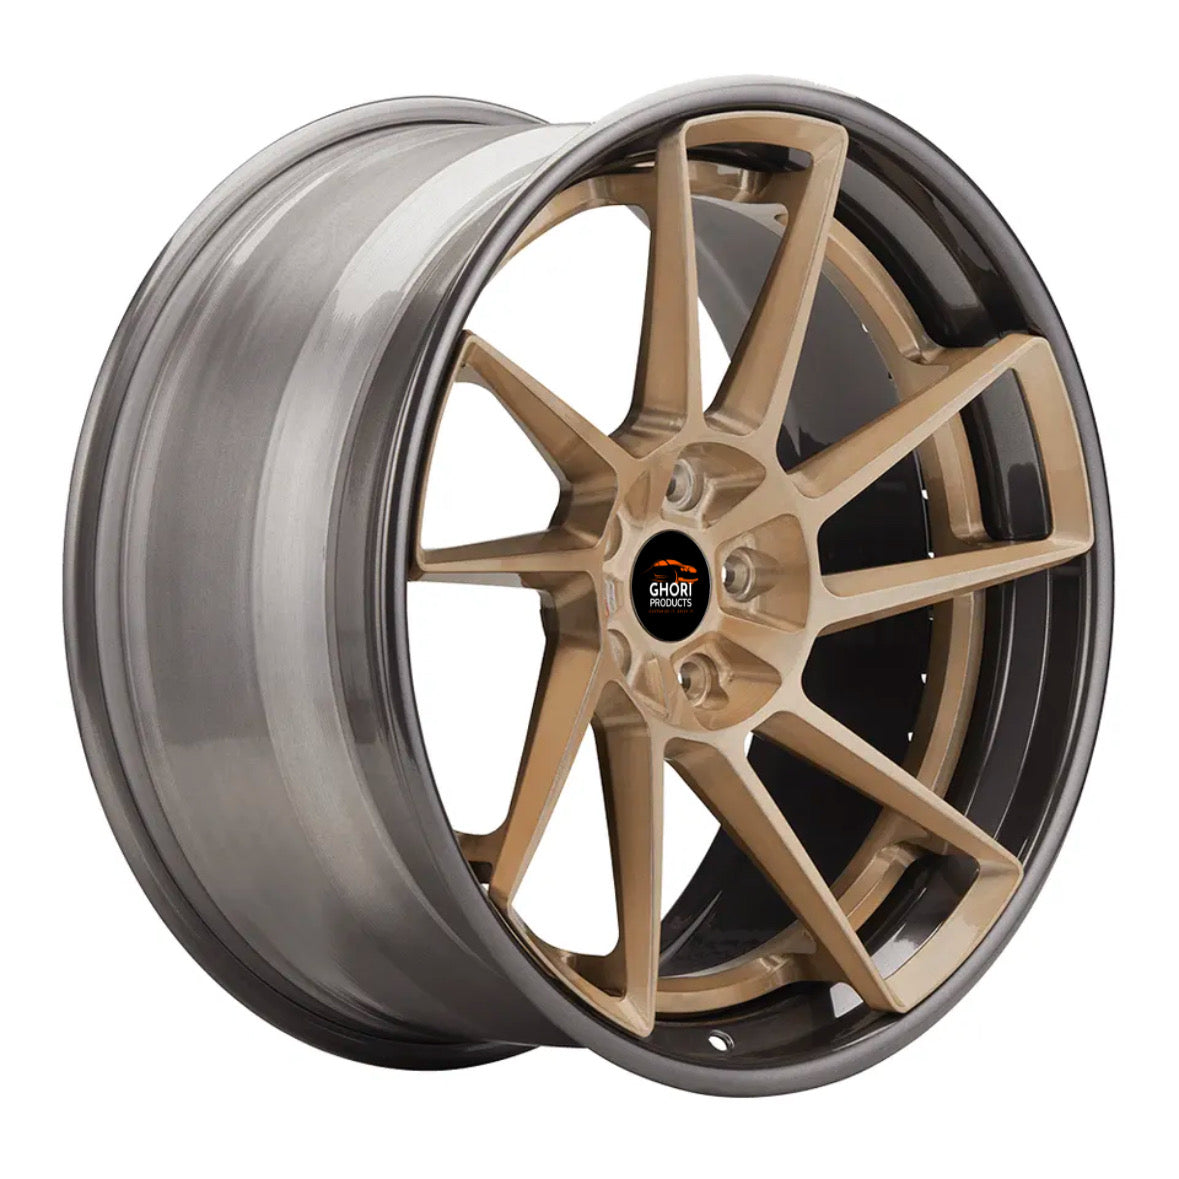 Concave Elegance - Forged Aluminum T108 Wheels for Tesla Model S 5X120 (Set of 4)